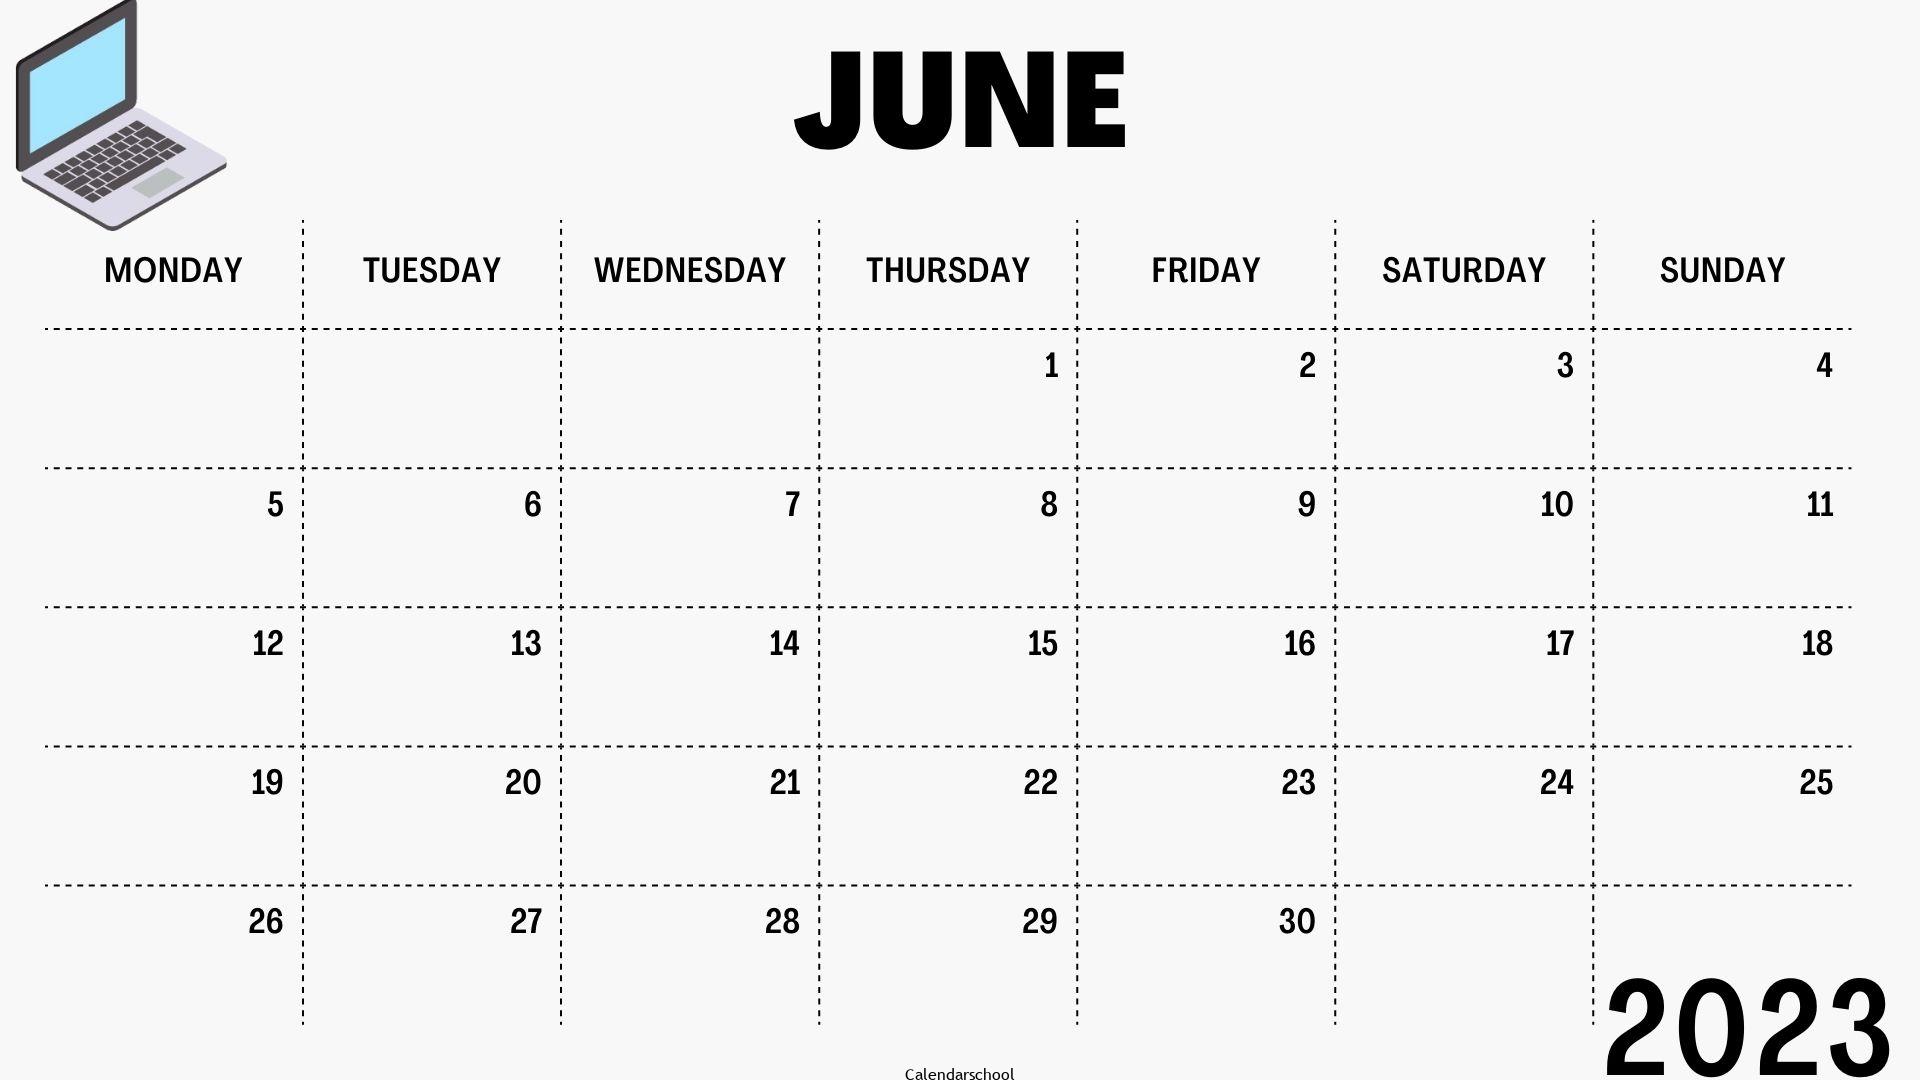 2023 June Calendar and Event